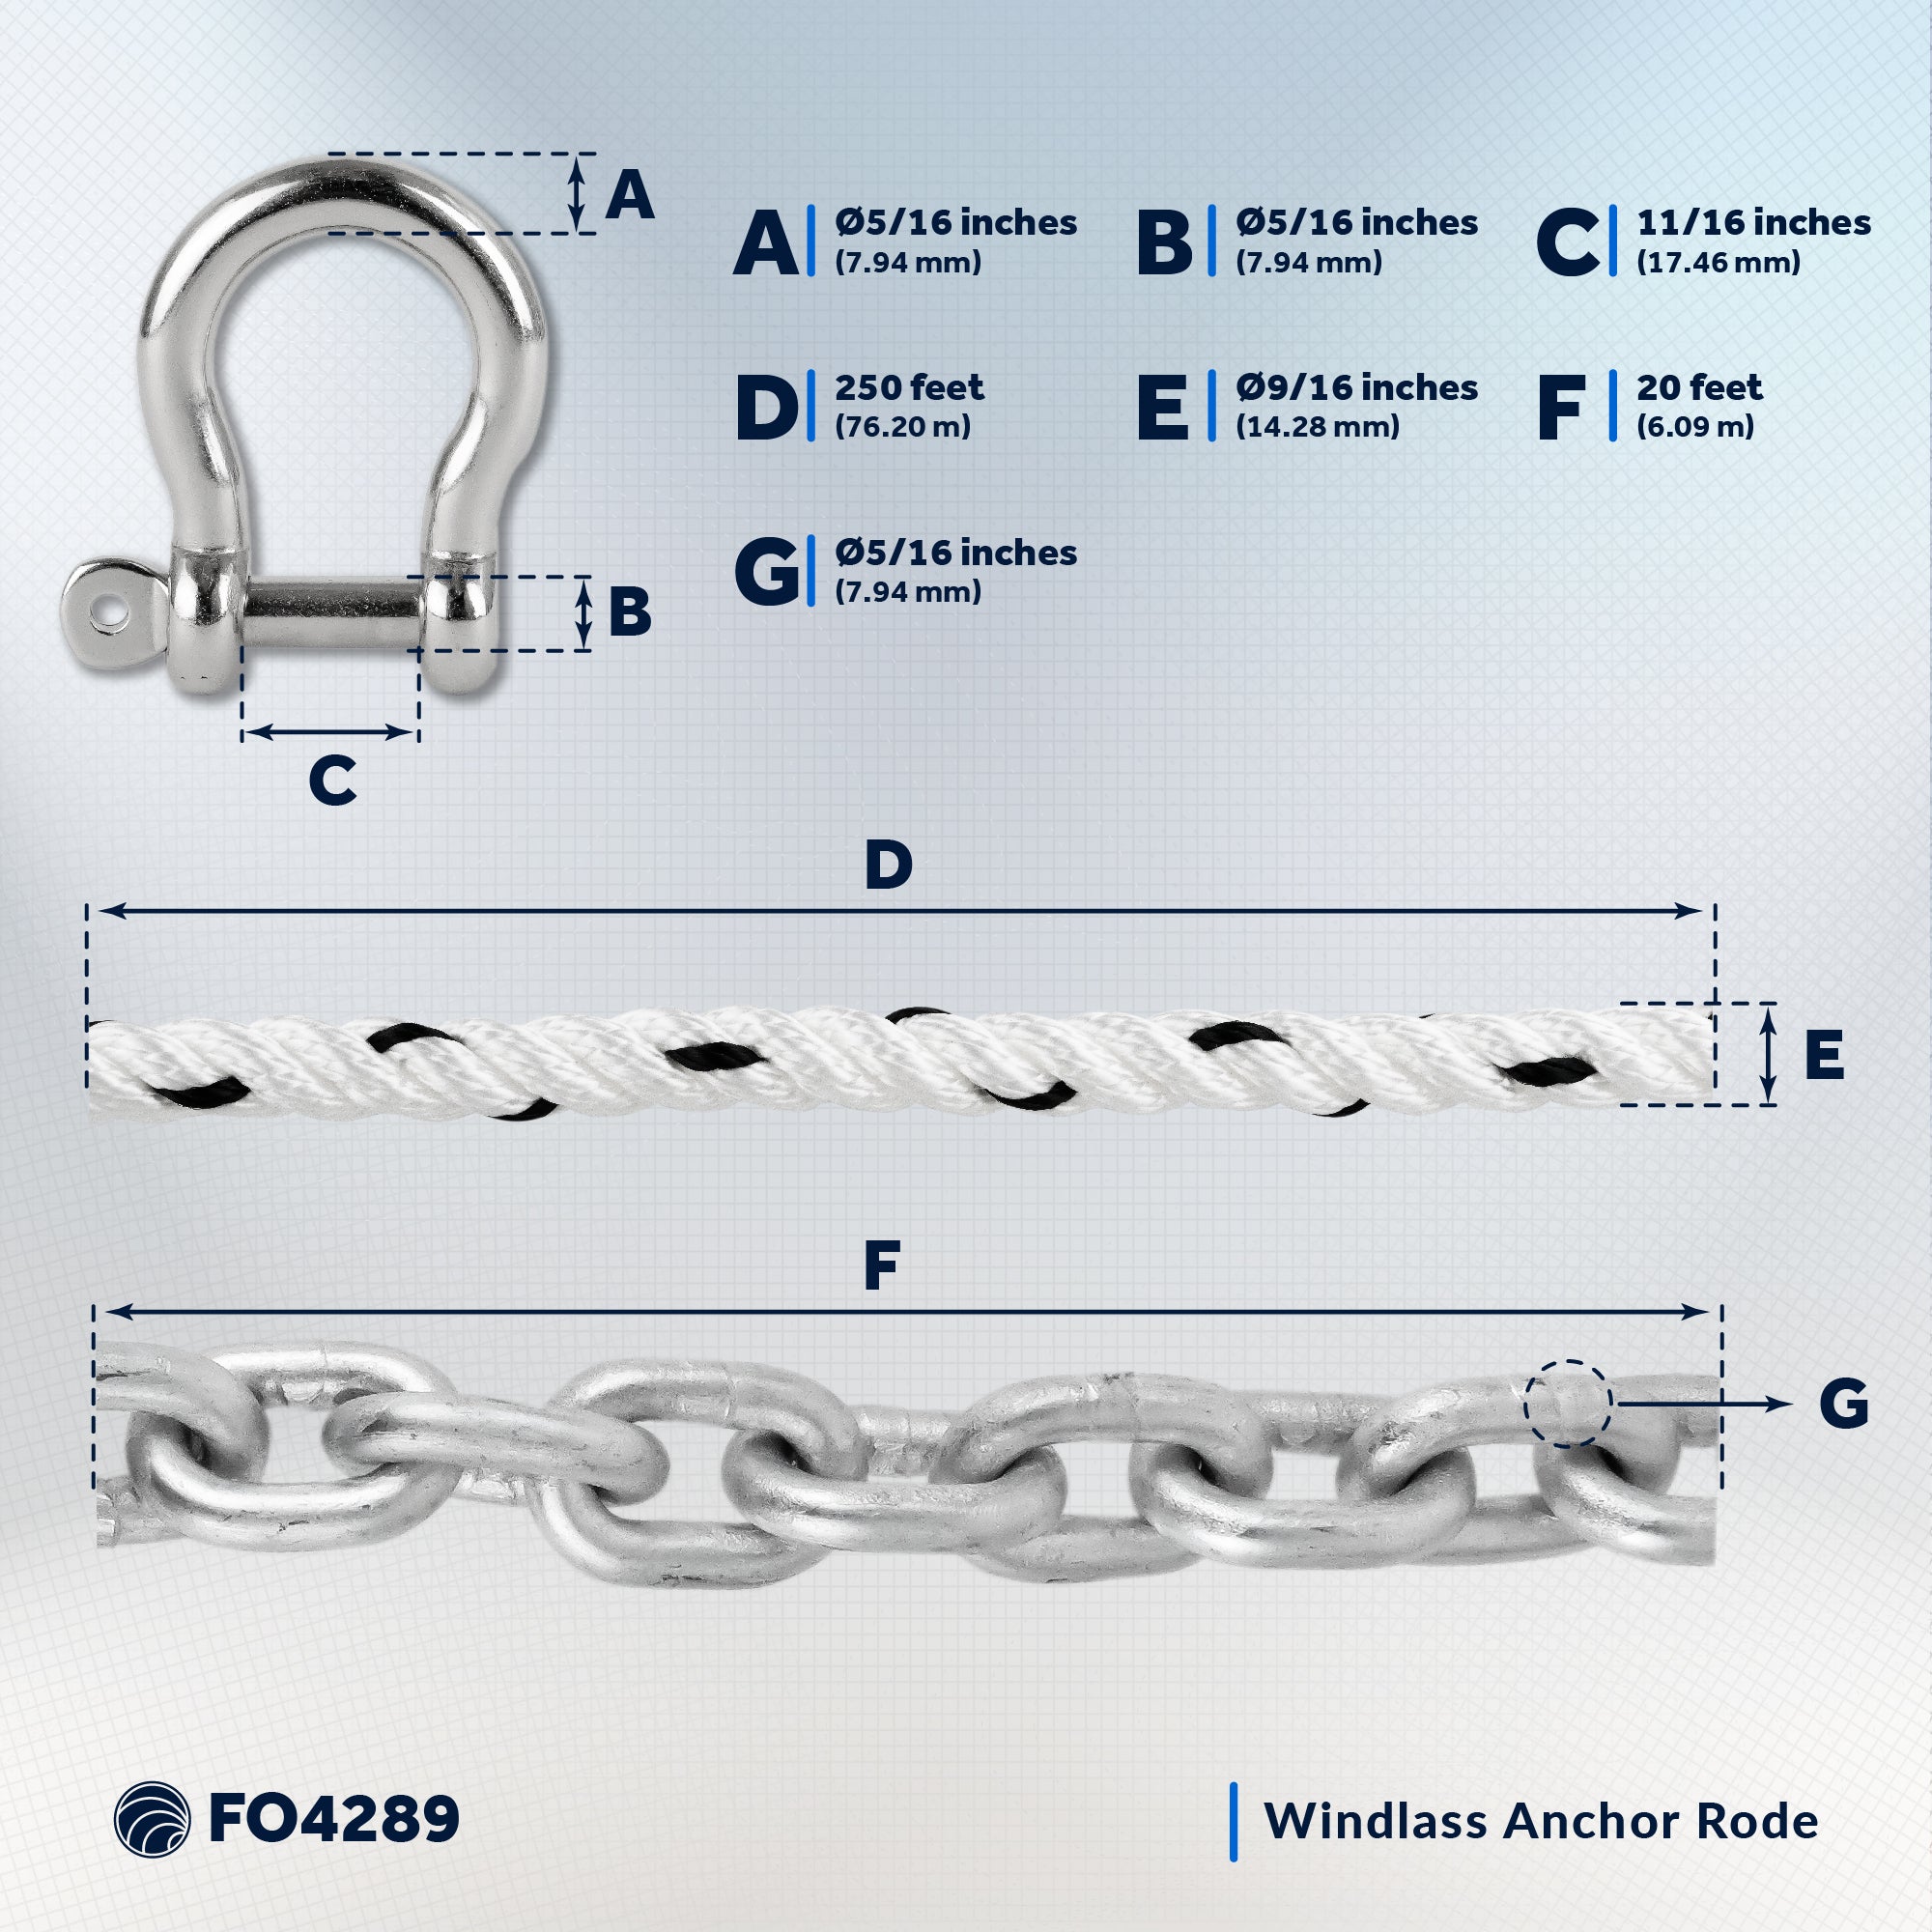 Windlass Anchor Rode, 9/16" x 250' Nylon 3-Strand Rope - 5/16" x 20' G4 Hot-Dipped Galvanized Steel Chain - FO4289